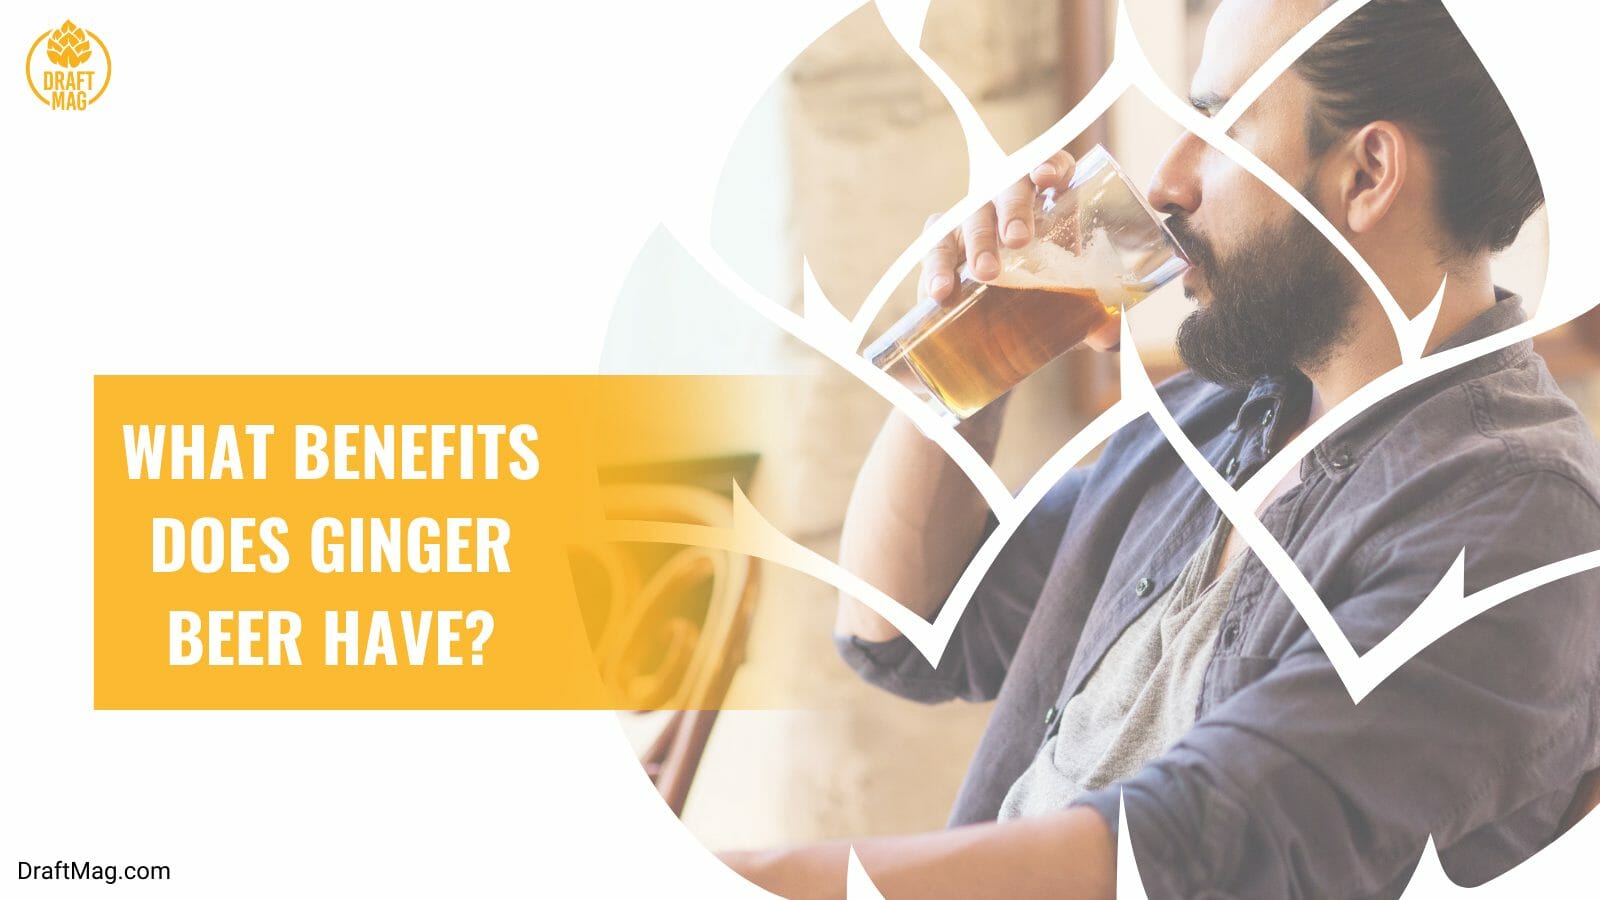 Benefits of ginger beer